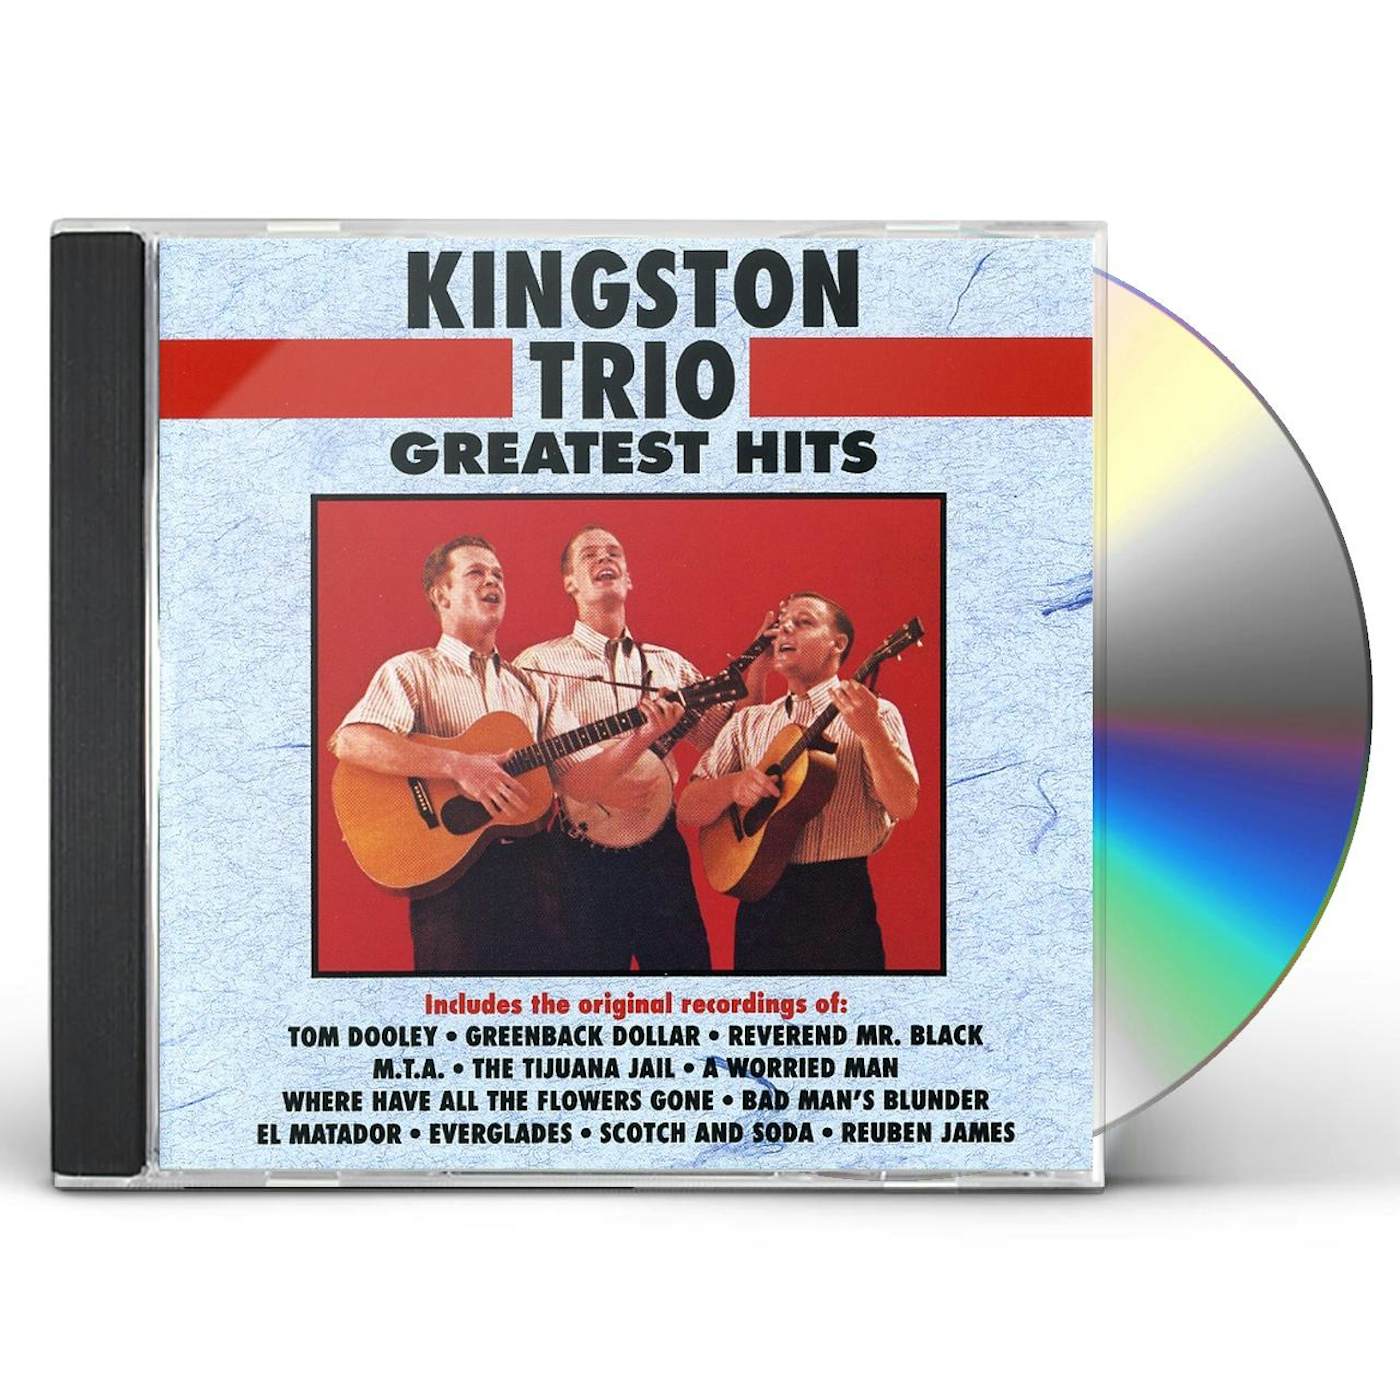 The Kingston Trio GREATEST HITS CD